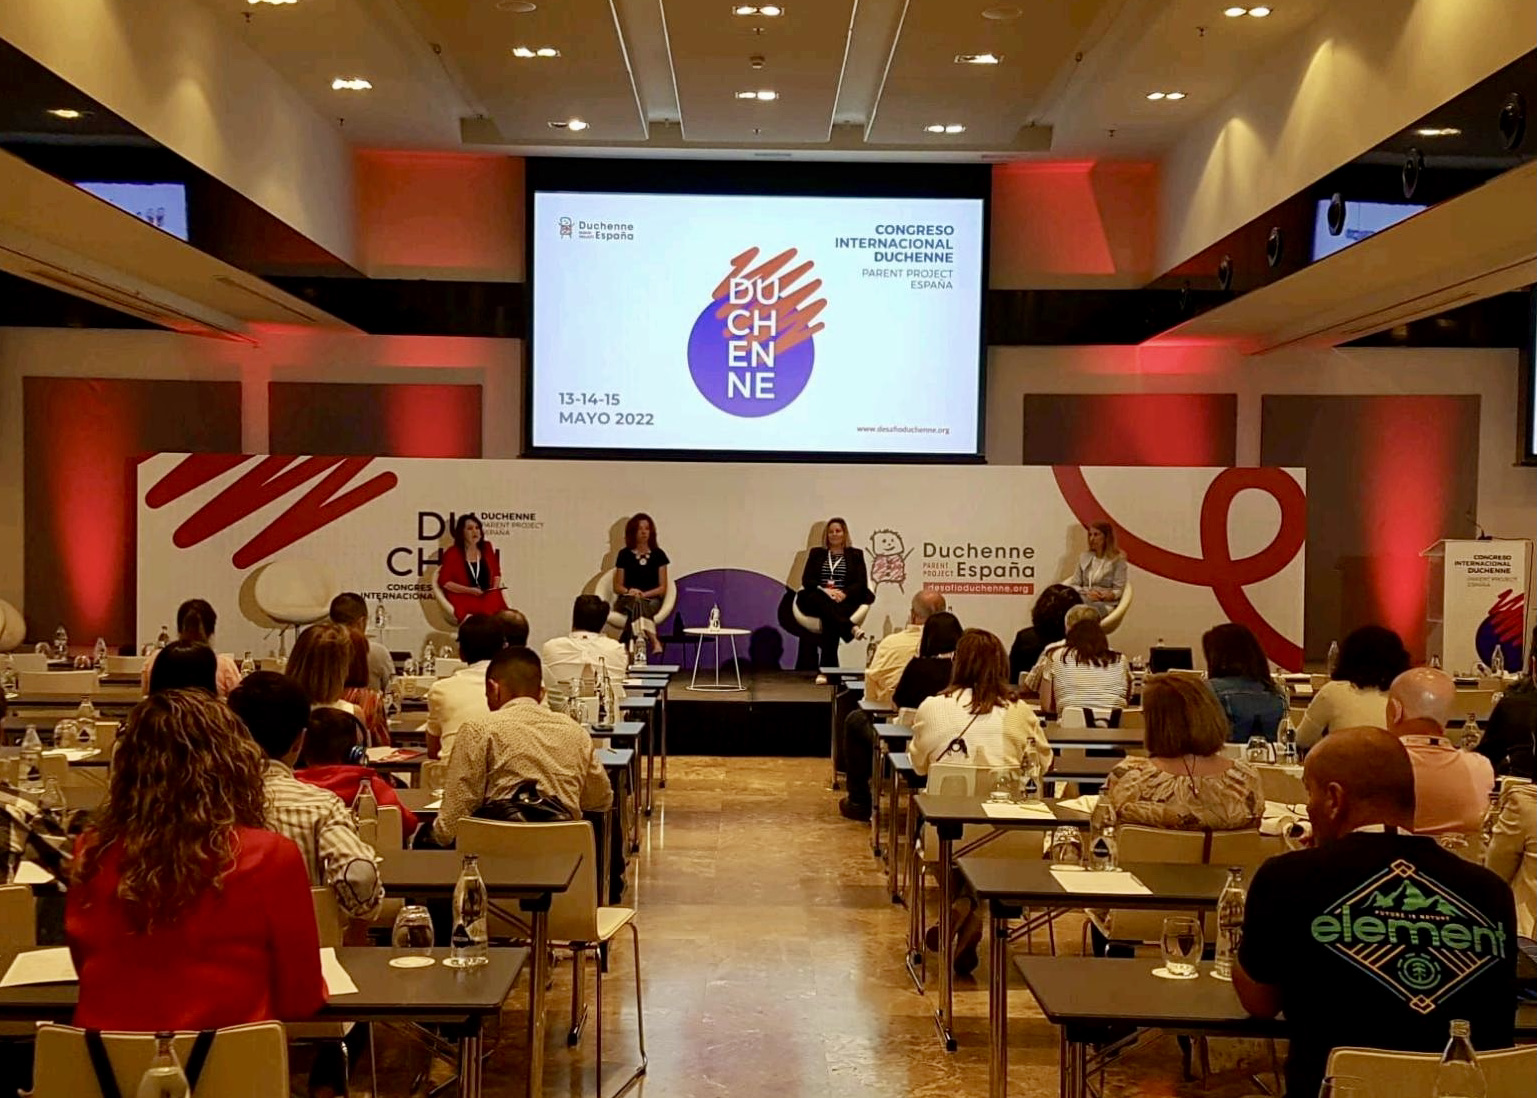 The BIOMEC Lab participated at the International Congress Duchenne Parent Project España